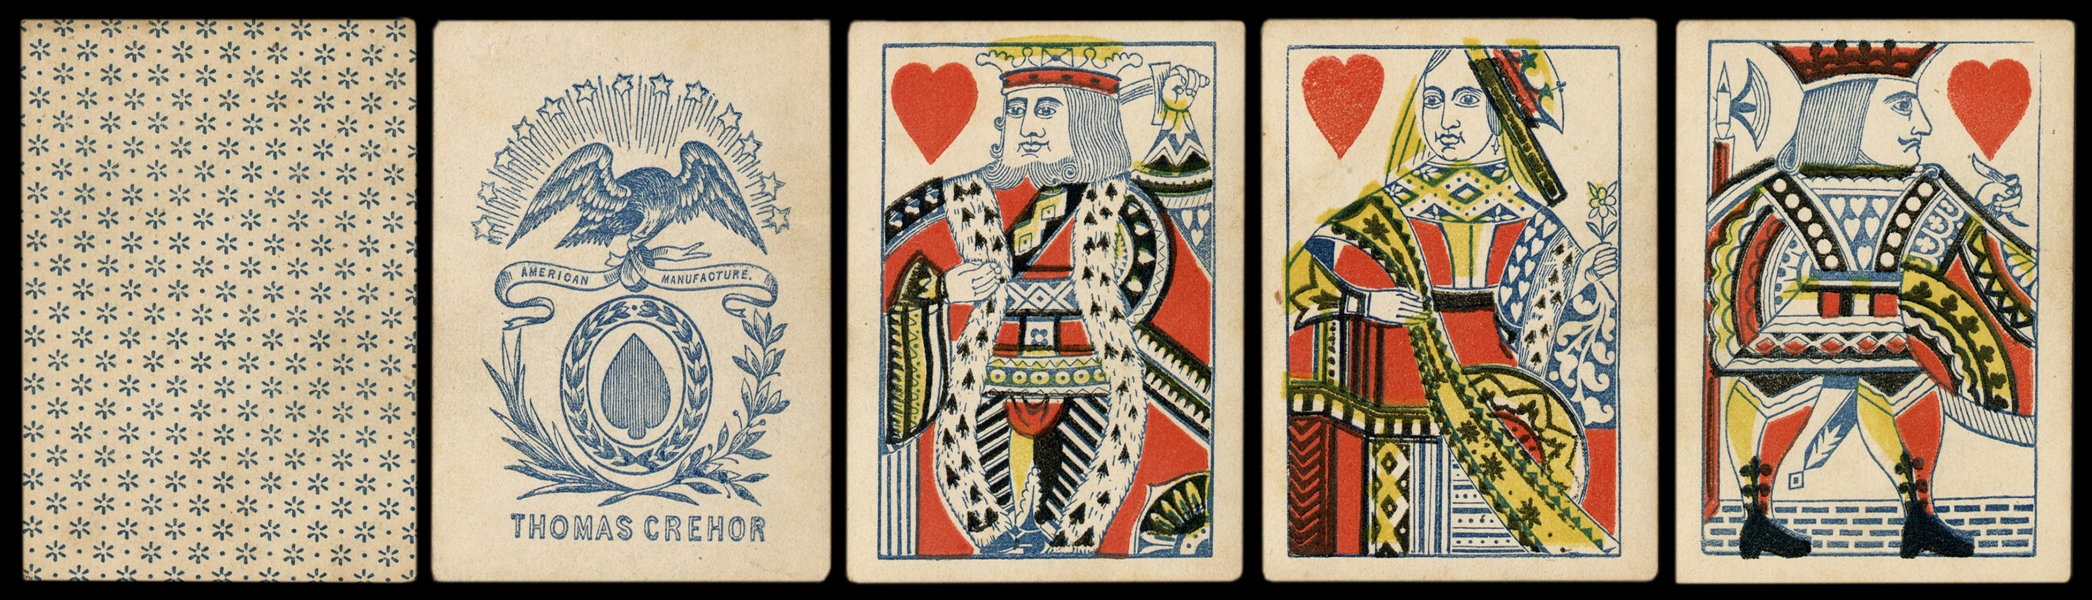  Thomas Crehor American Manufacture Playing Cards. [Massachu...